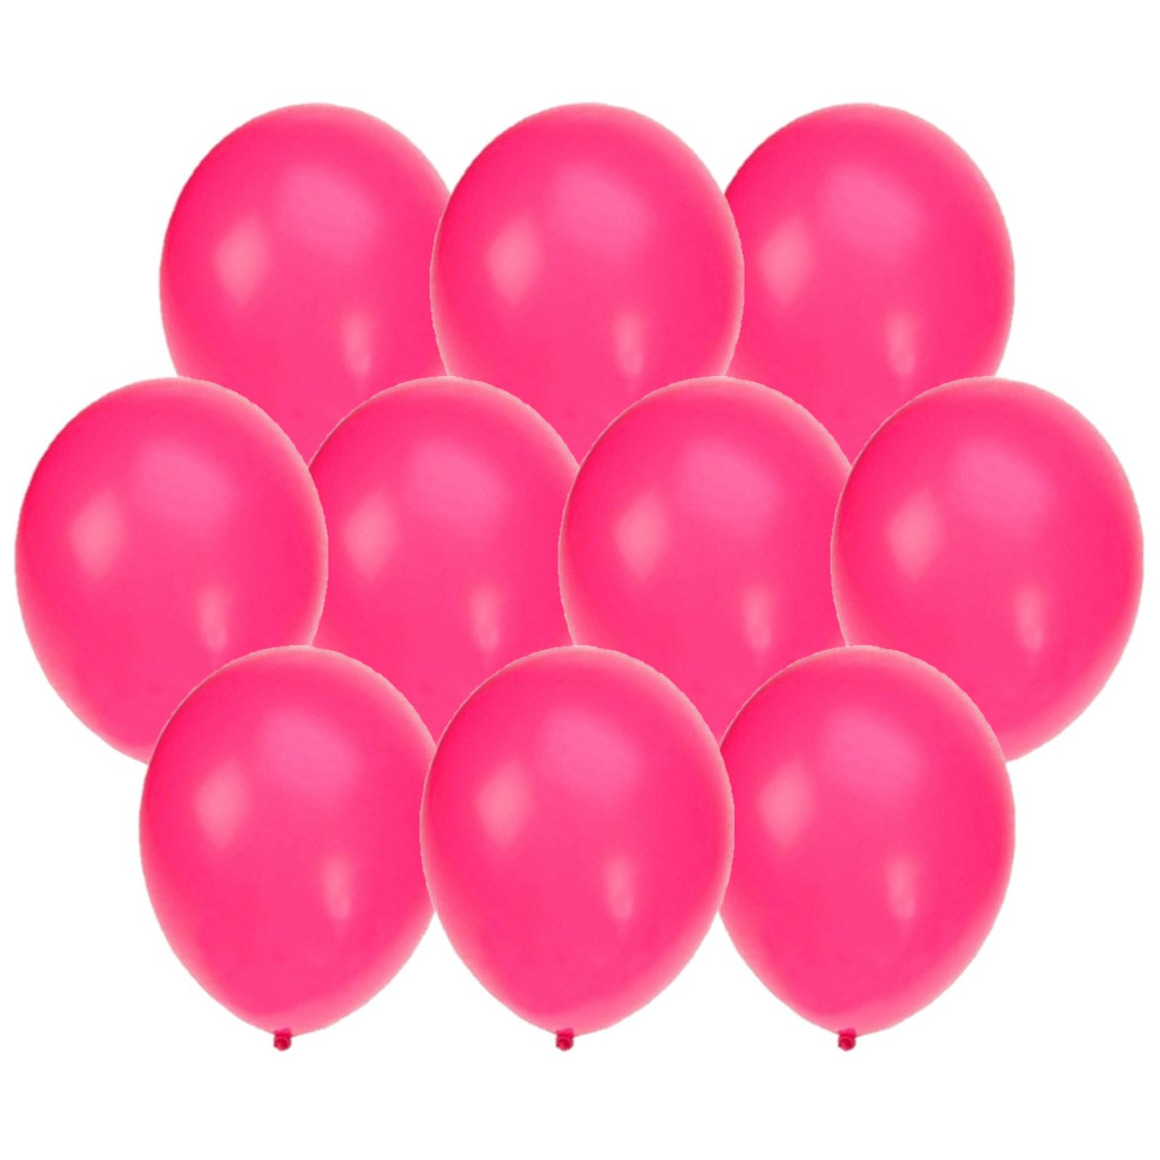 60x stuks Neon roze party ballonnen 27 cm -